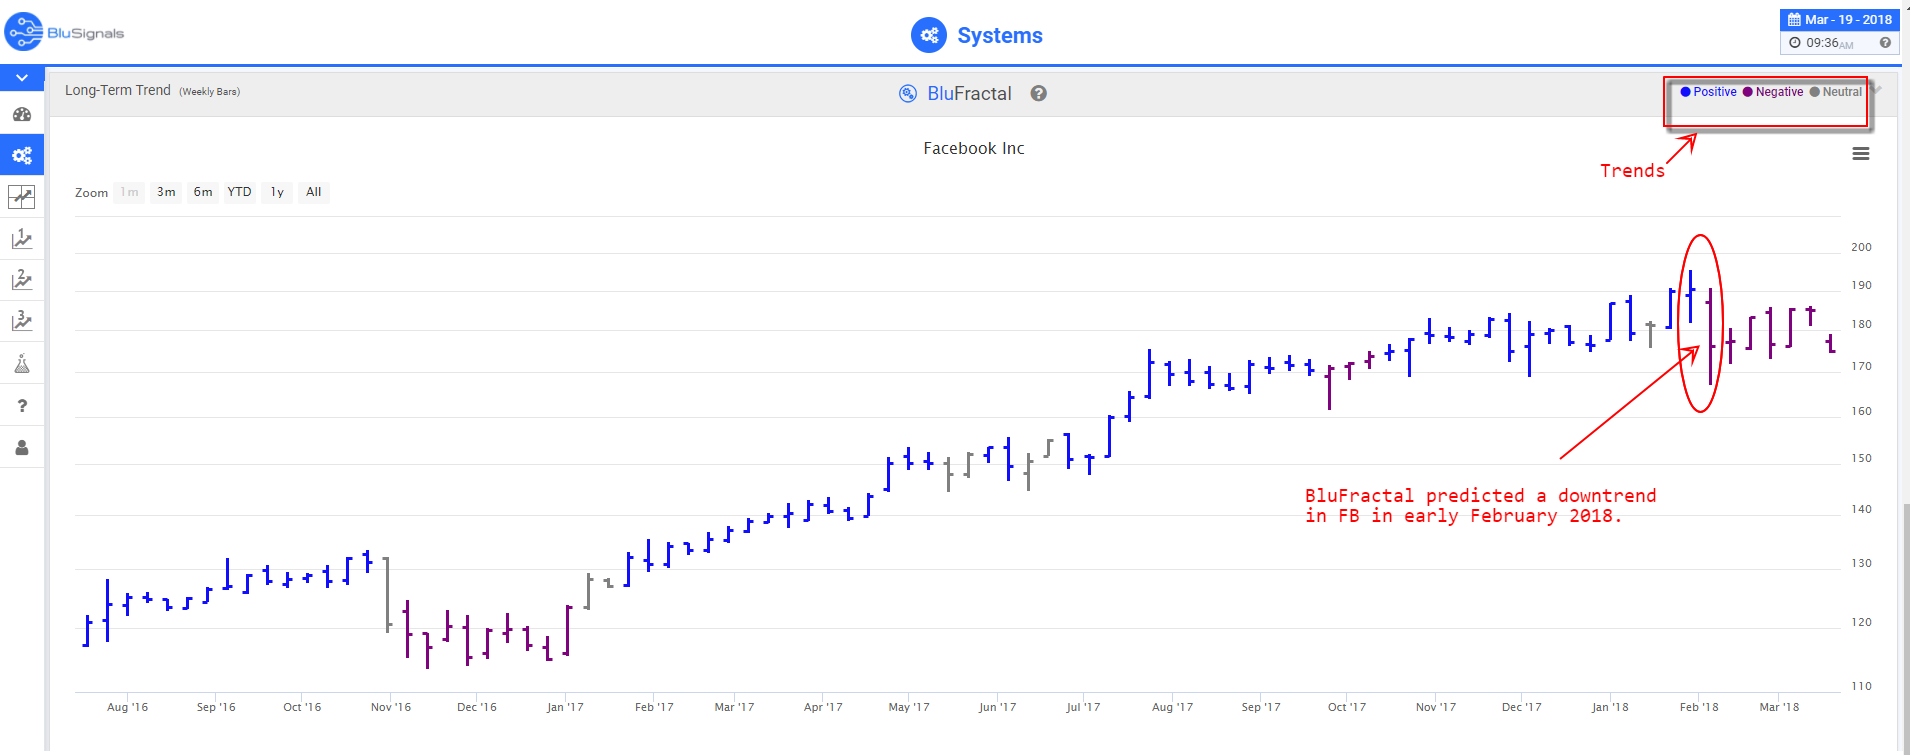 FB stock trading signals